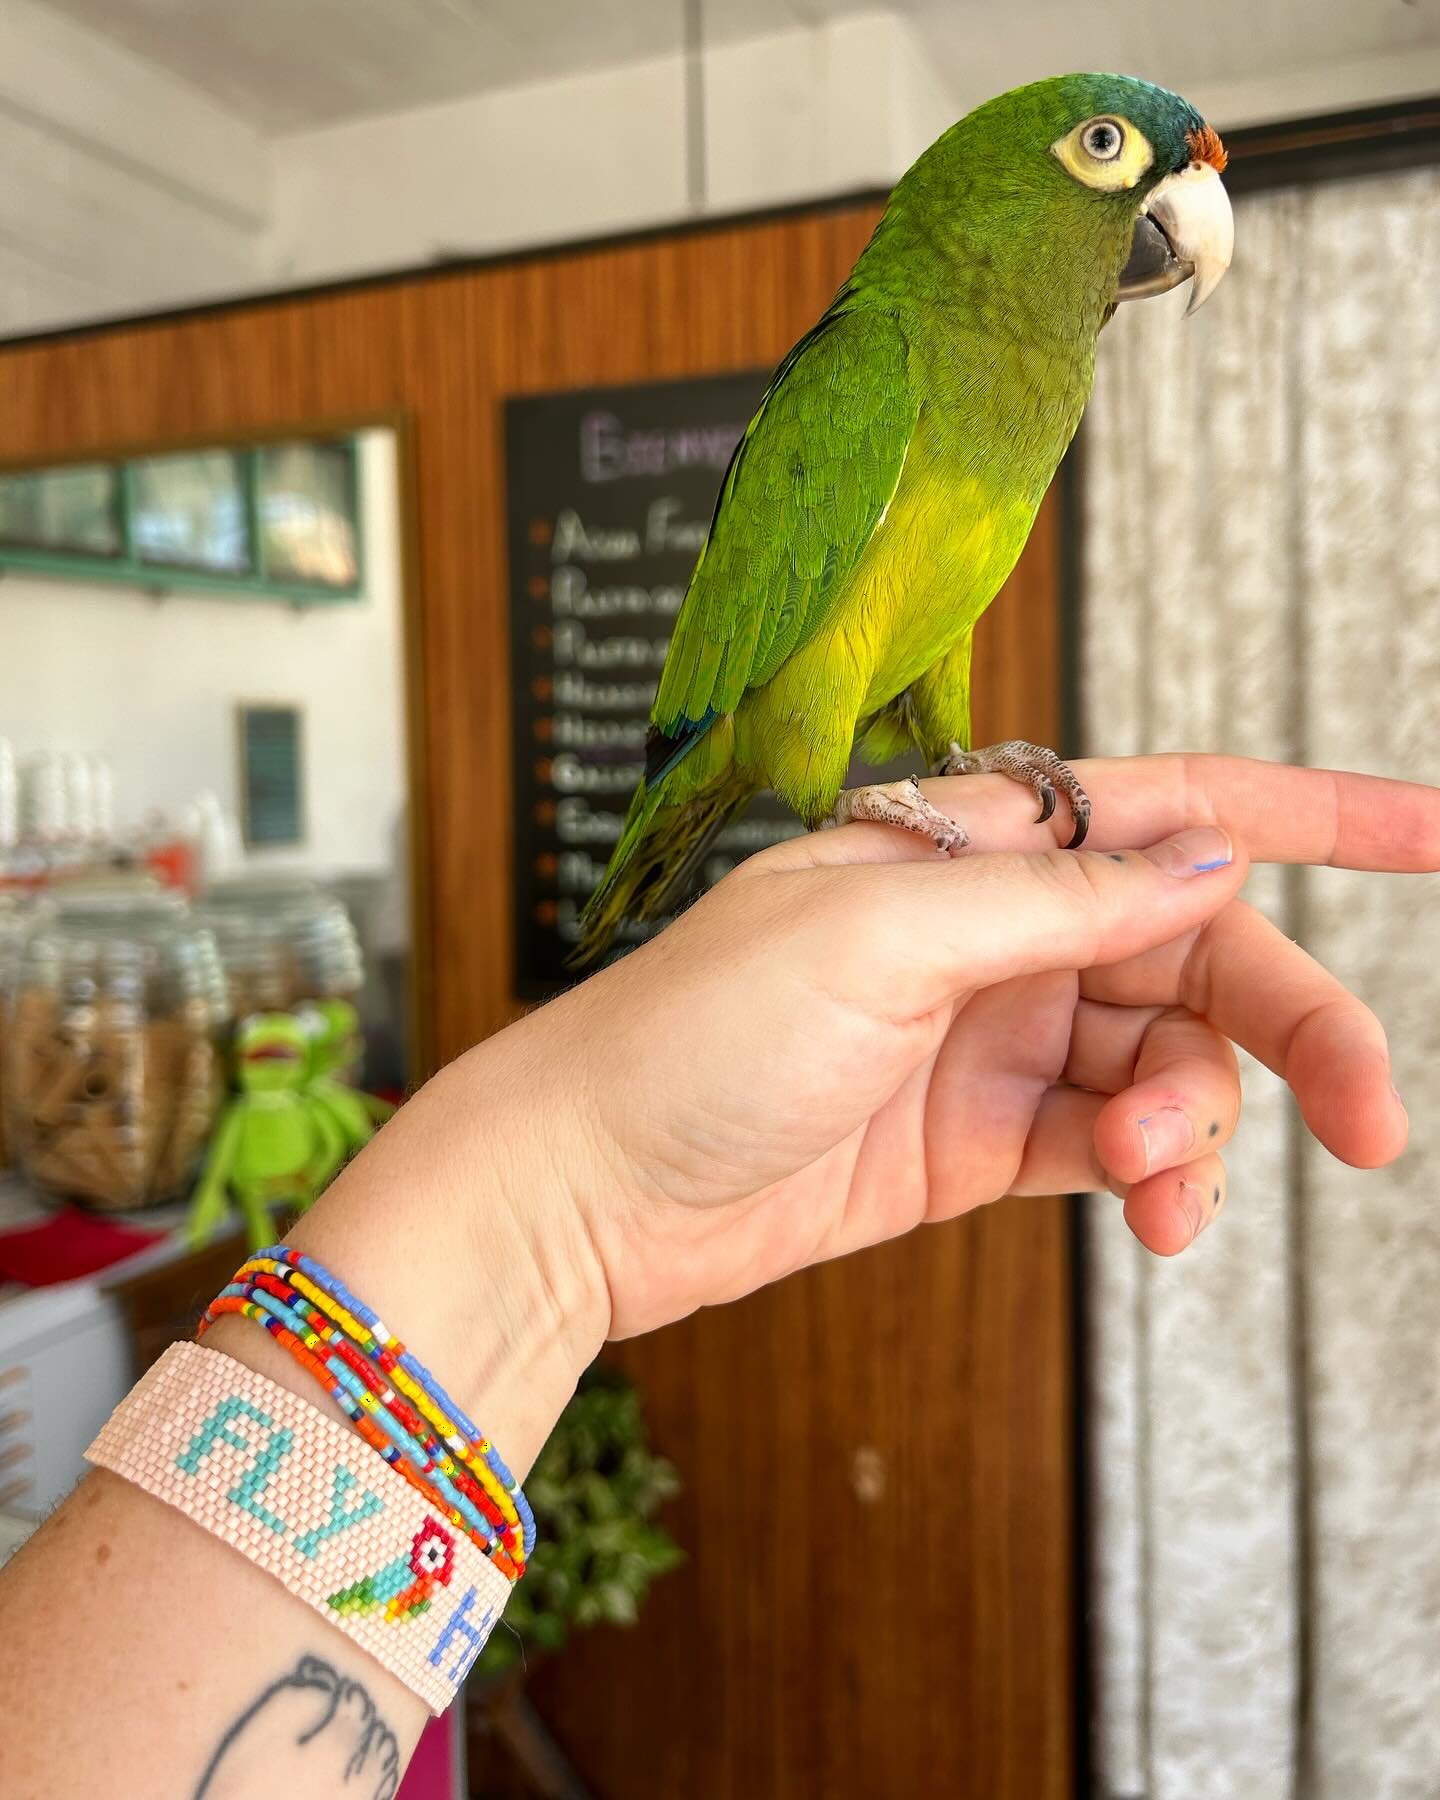 Matching with the cutest little #parrot.  New #fly #high #stitch #bracelet. 🦜🦜🦜🦜
.
.
.
#beadedjewelry #jewelry #jewellery #parrots #mexico #puertovallarta #bracelets #stackablebracelets #braceletstacks #handcrafted